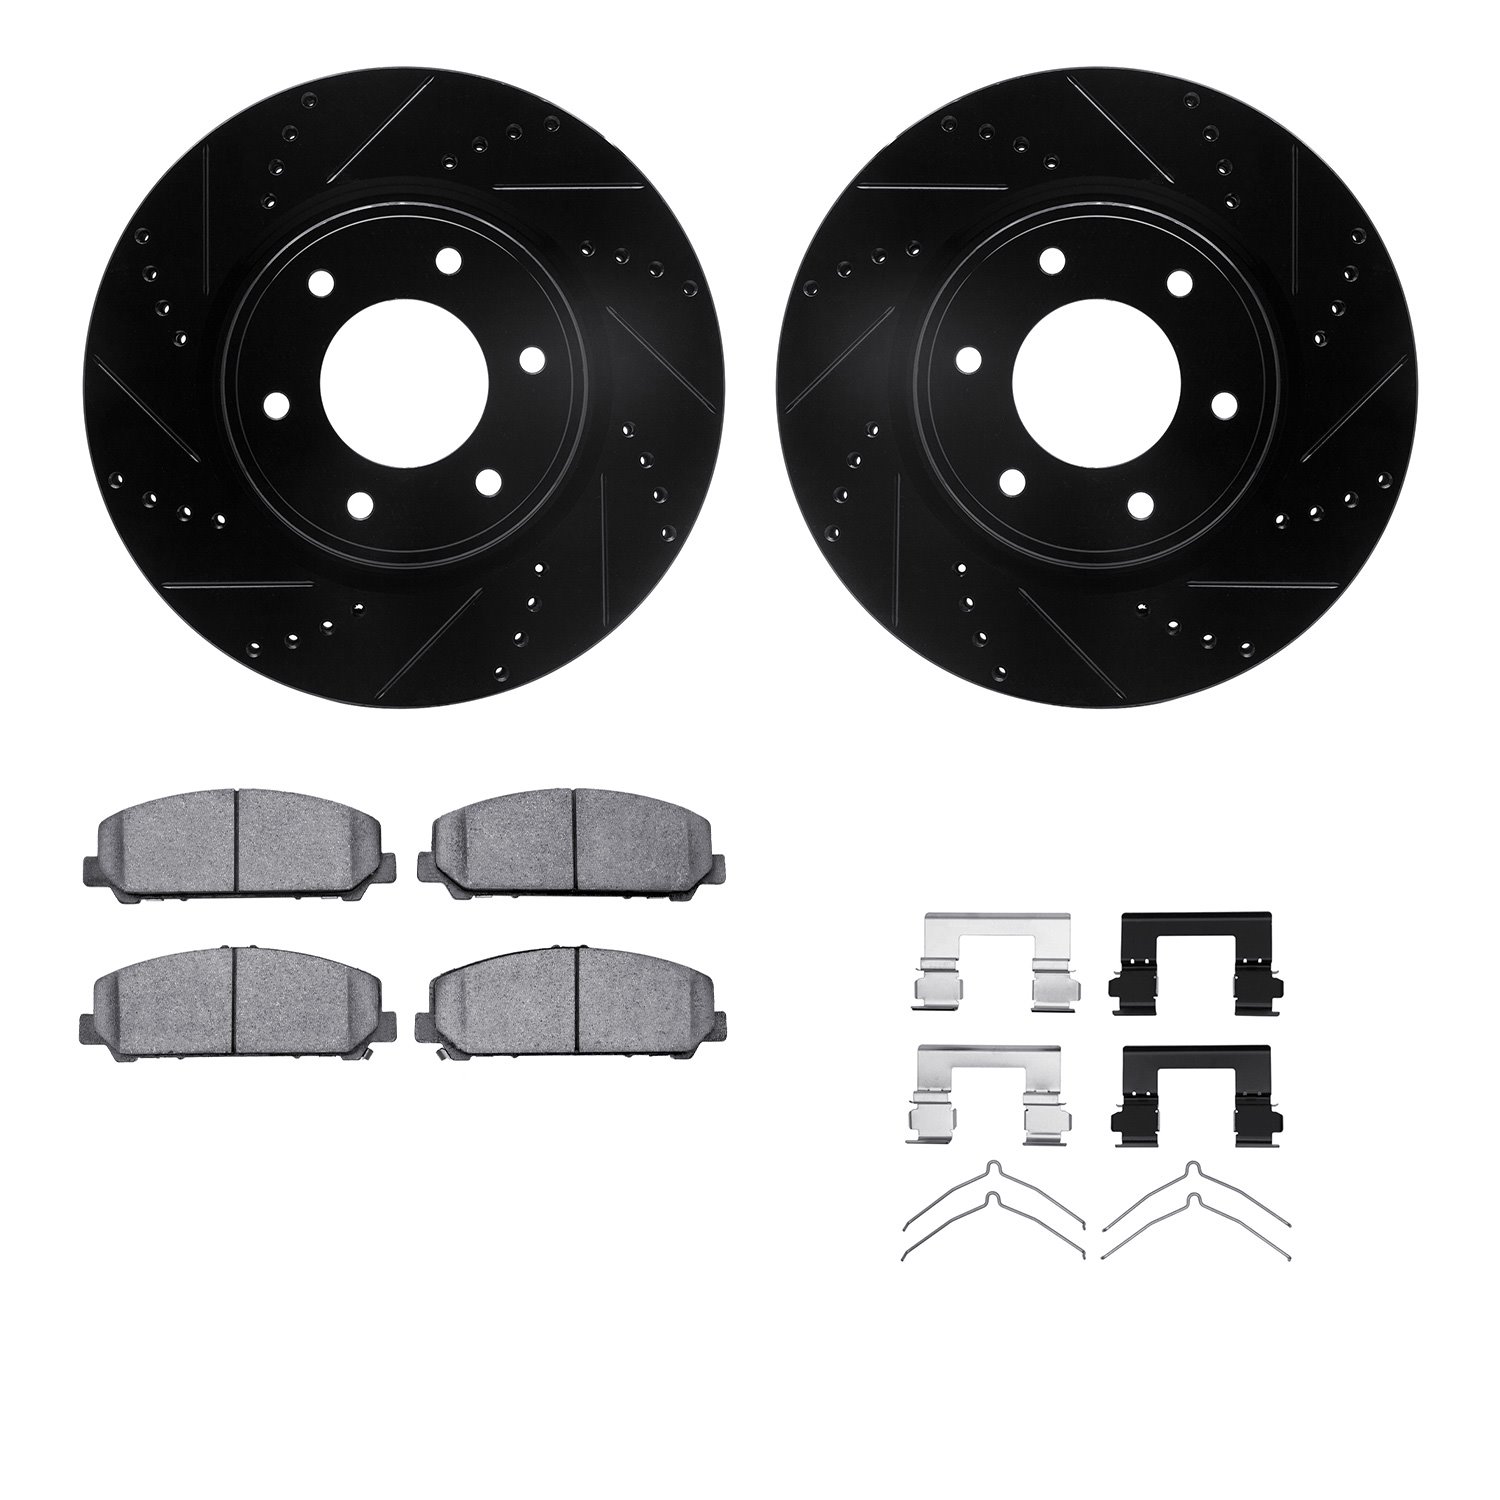 8312-67119 Drilled/Slotted Brake Rotors with 3000-Series Ceramic Brake Pads Kit & Hardware [Black], Fits Select Infiniti/Nissan,